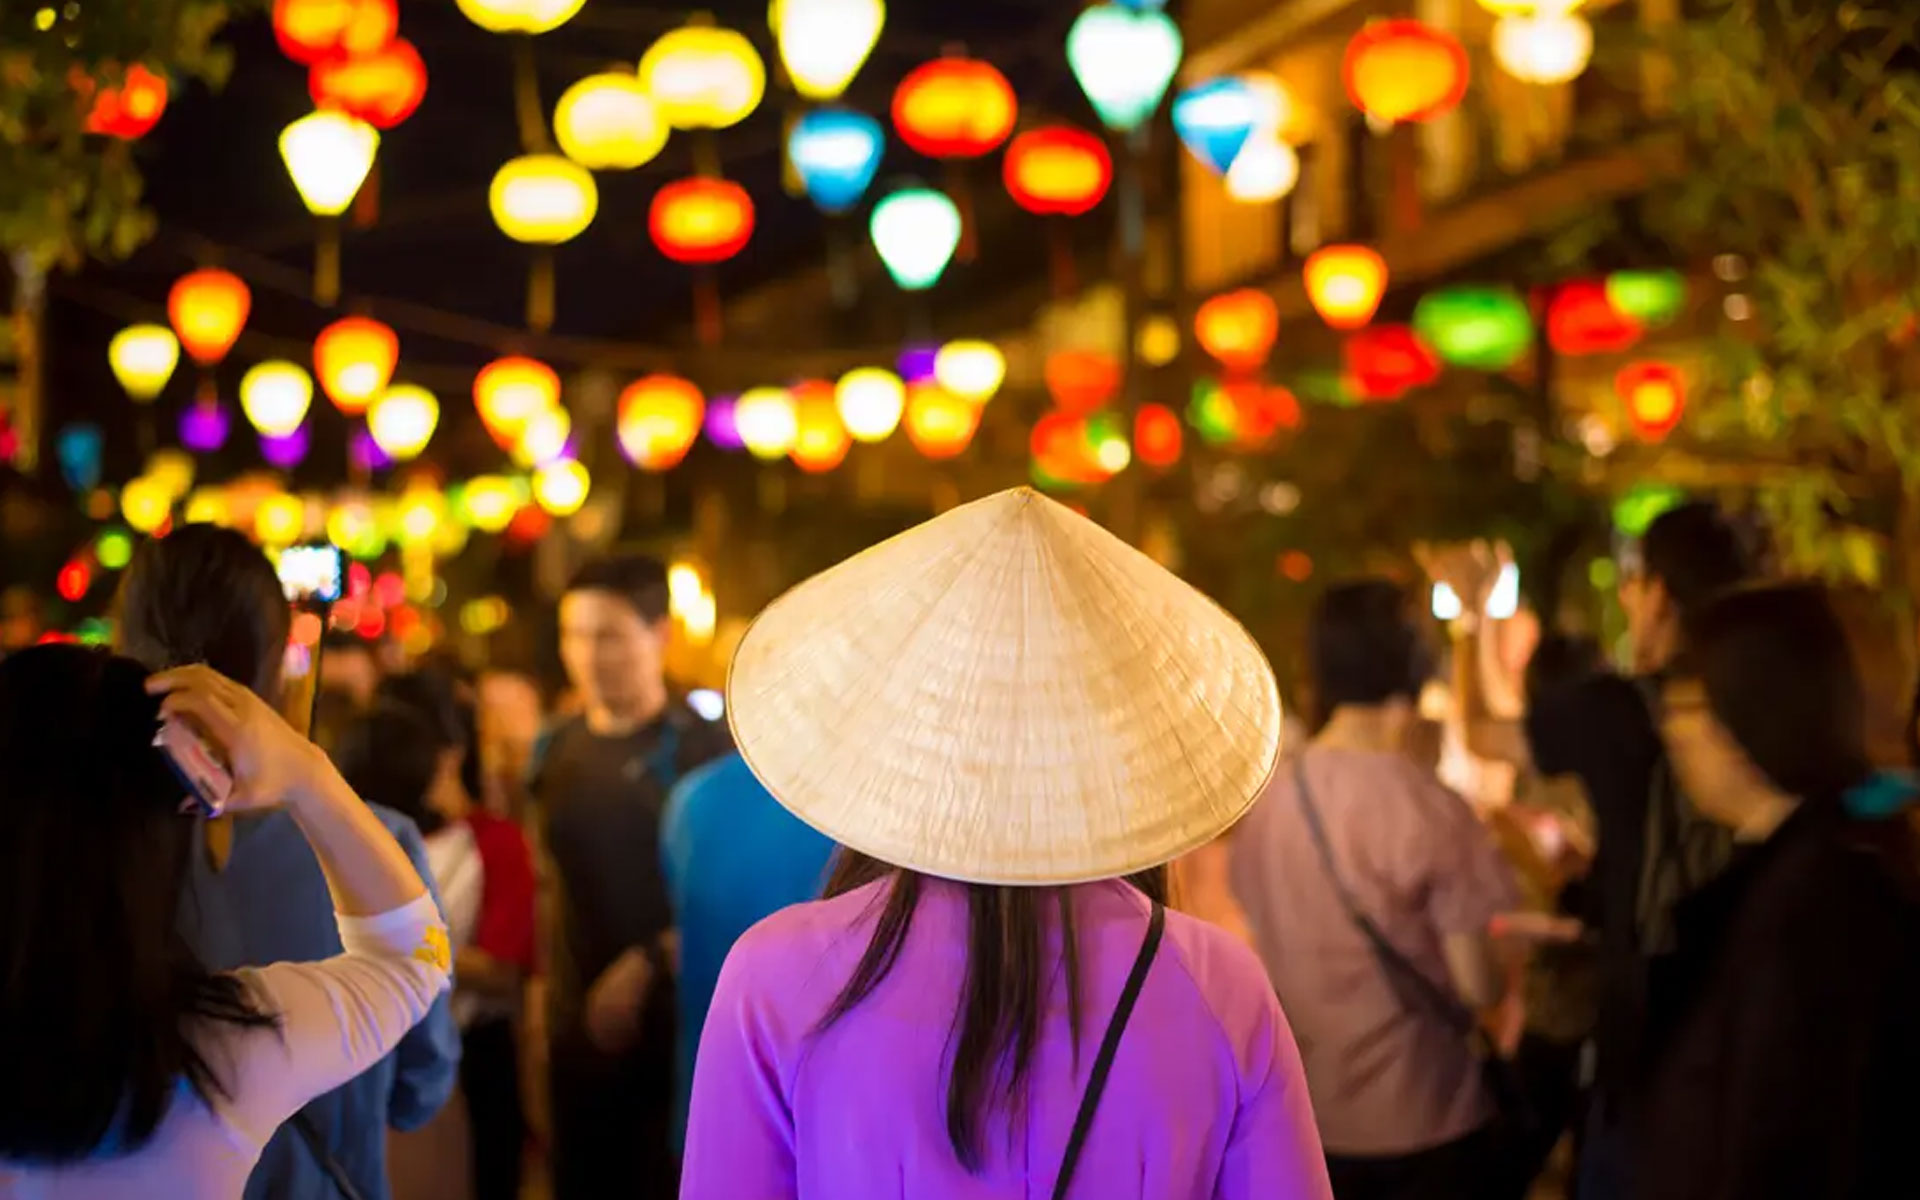 Non La (conical hat) - a symbol of Vietnamese women.